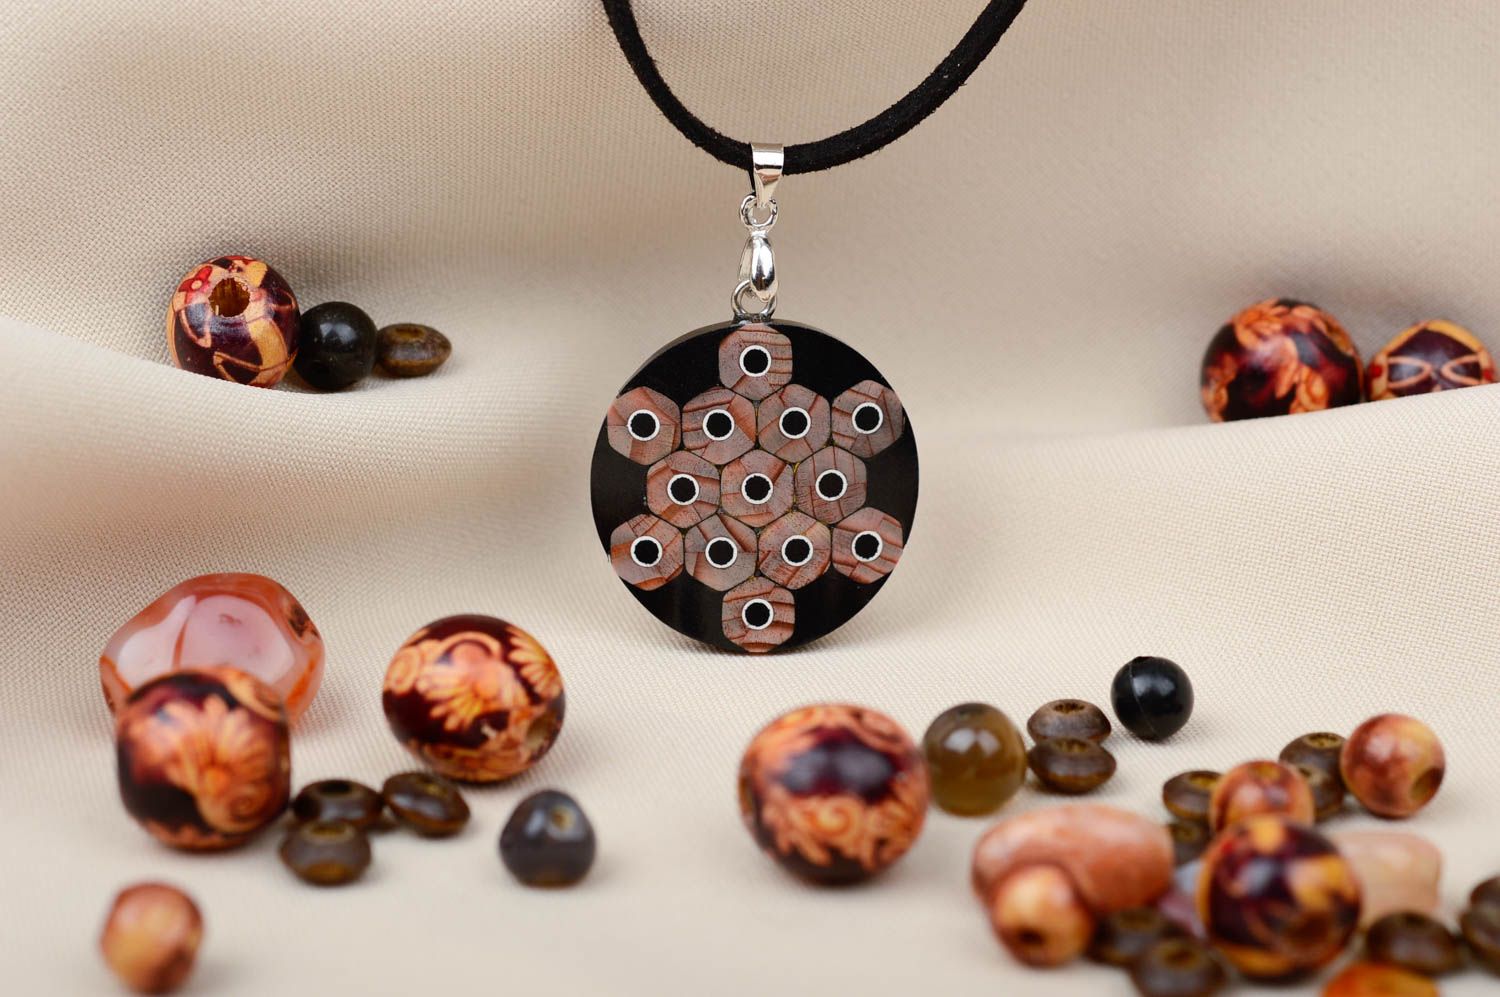 Handmade pendant unusual neck accessory gift ideas wooden pendant designer gift photo 1